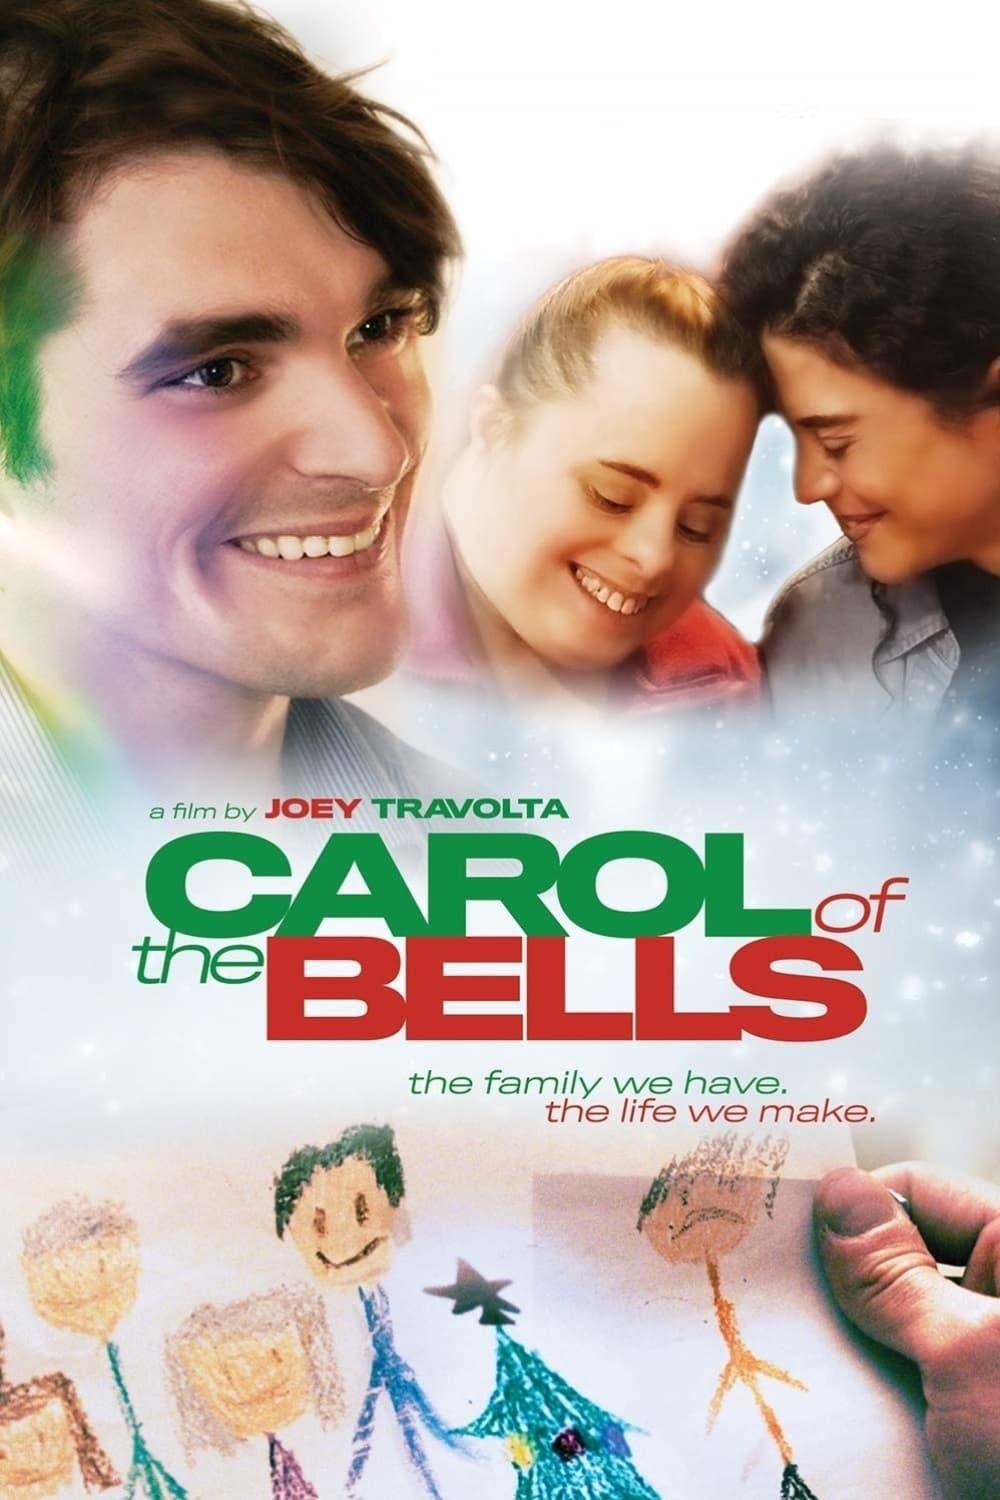 Carol of the Bells poster